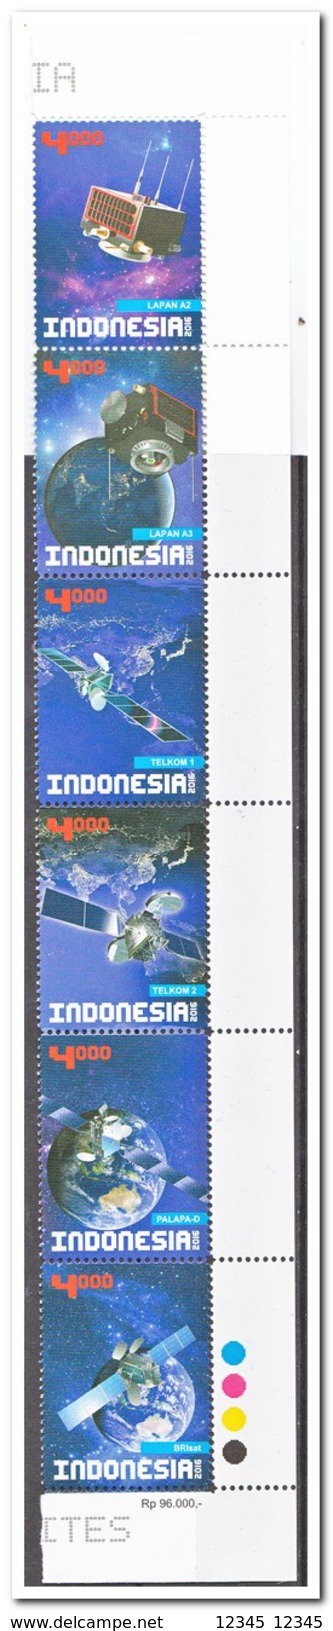 Indonesië 2016, Postfris MNH, SATELLITE - Indonesië